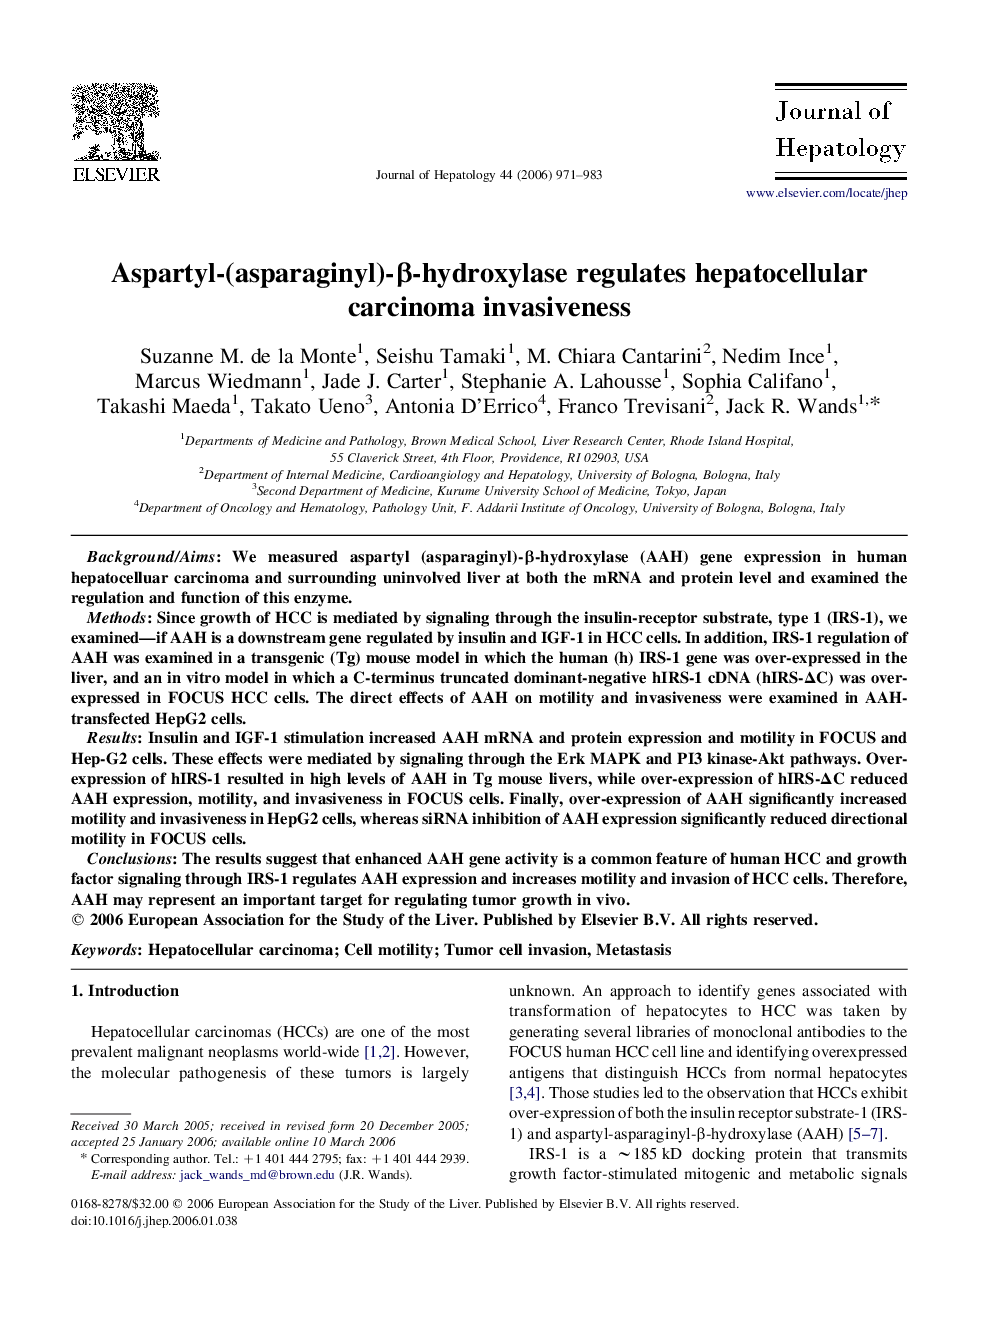 Aspartyl-(asparaginyl)-β-hydroxylase regulates hepatocellular carcinoma invasiveness